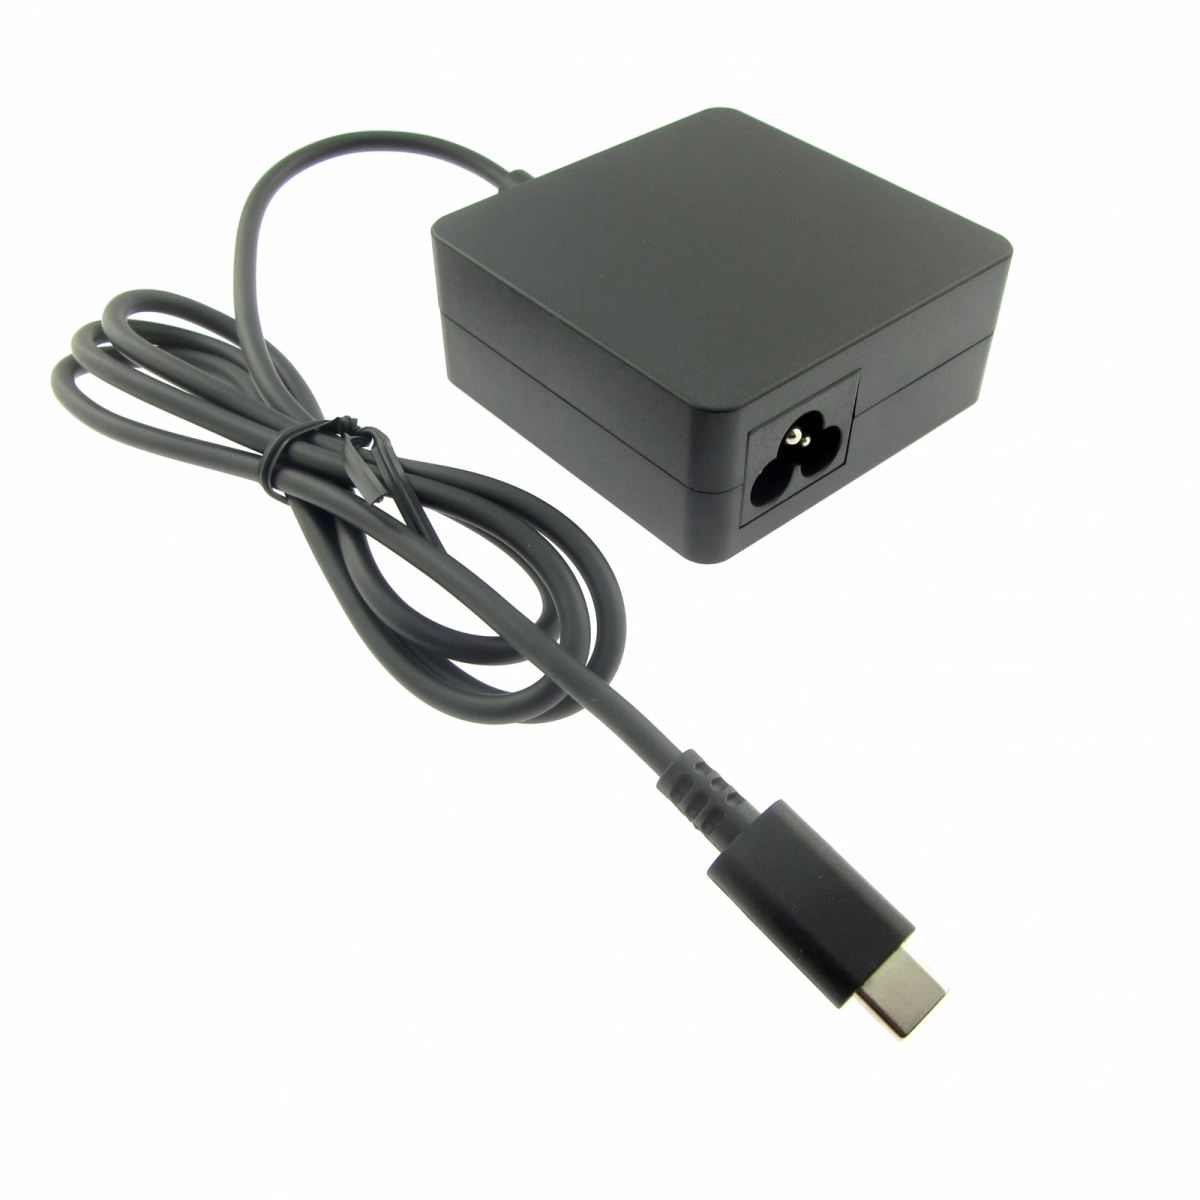 Original Netzteil für FSP 9NA0658207, 20V, 3.25A, Stecker USB-C, 65W